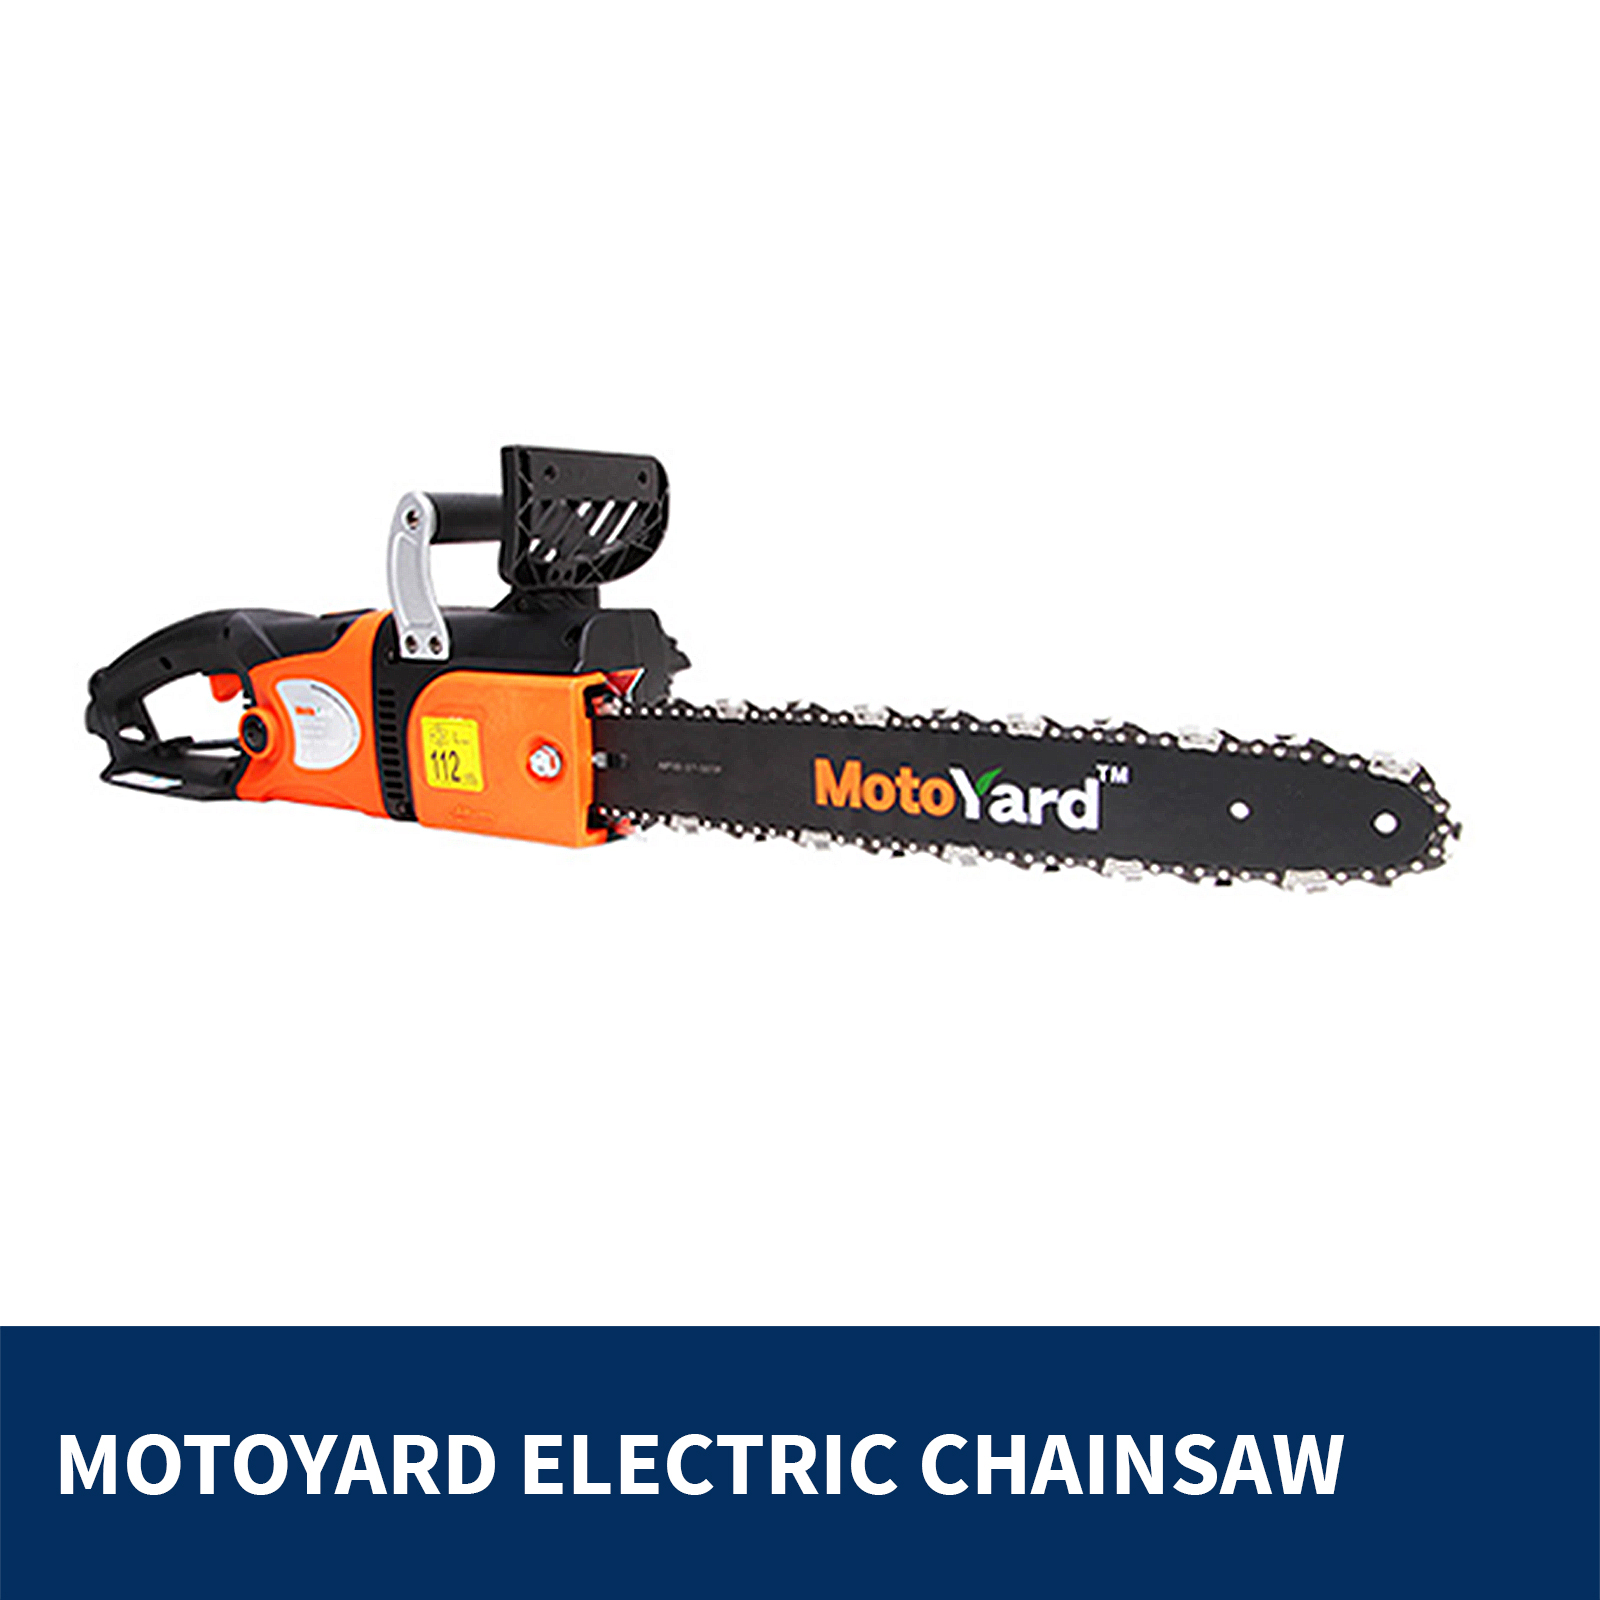 NEW Moto Yard 2400W Electric Chainsaw E-Start 16" Bar Chain Saw Tree Pruning 